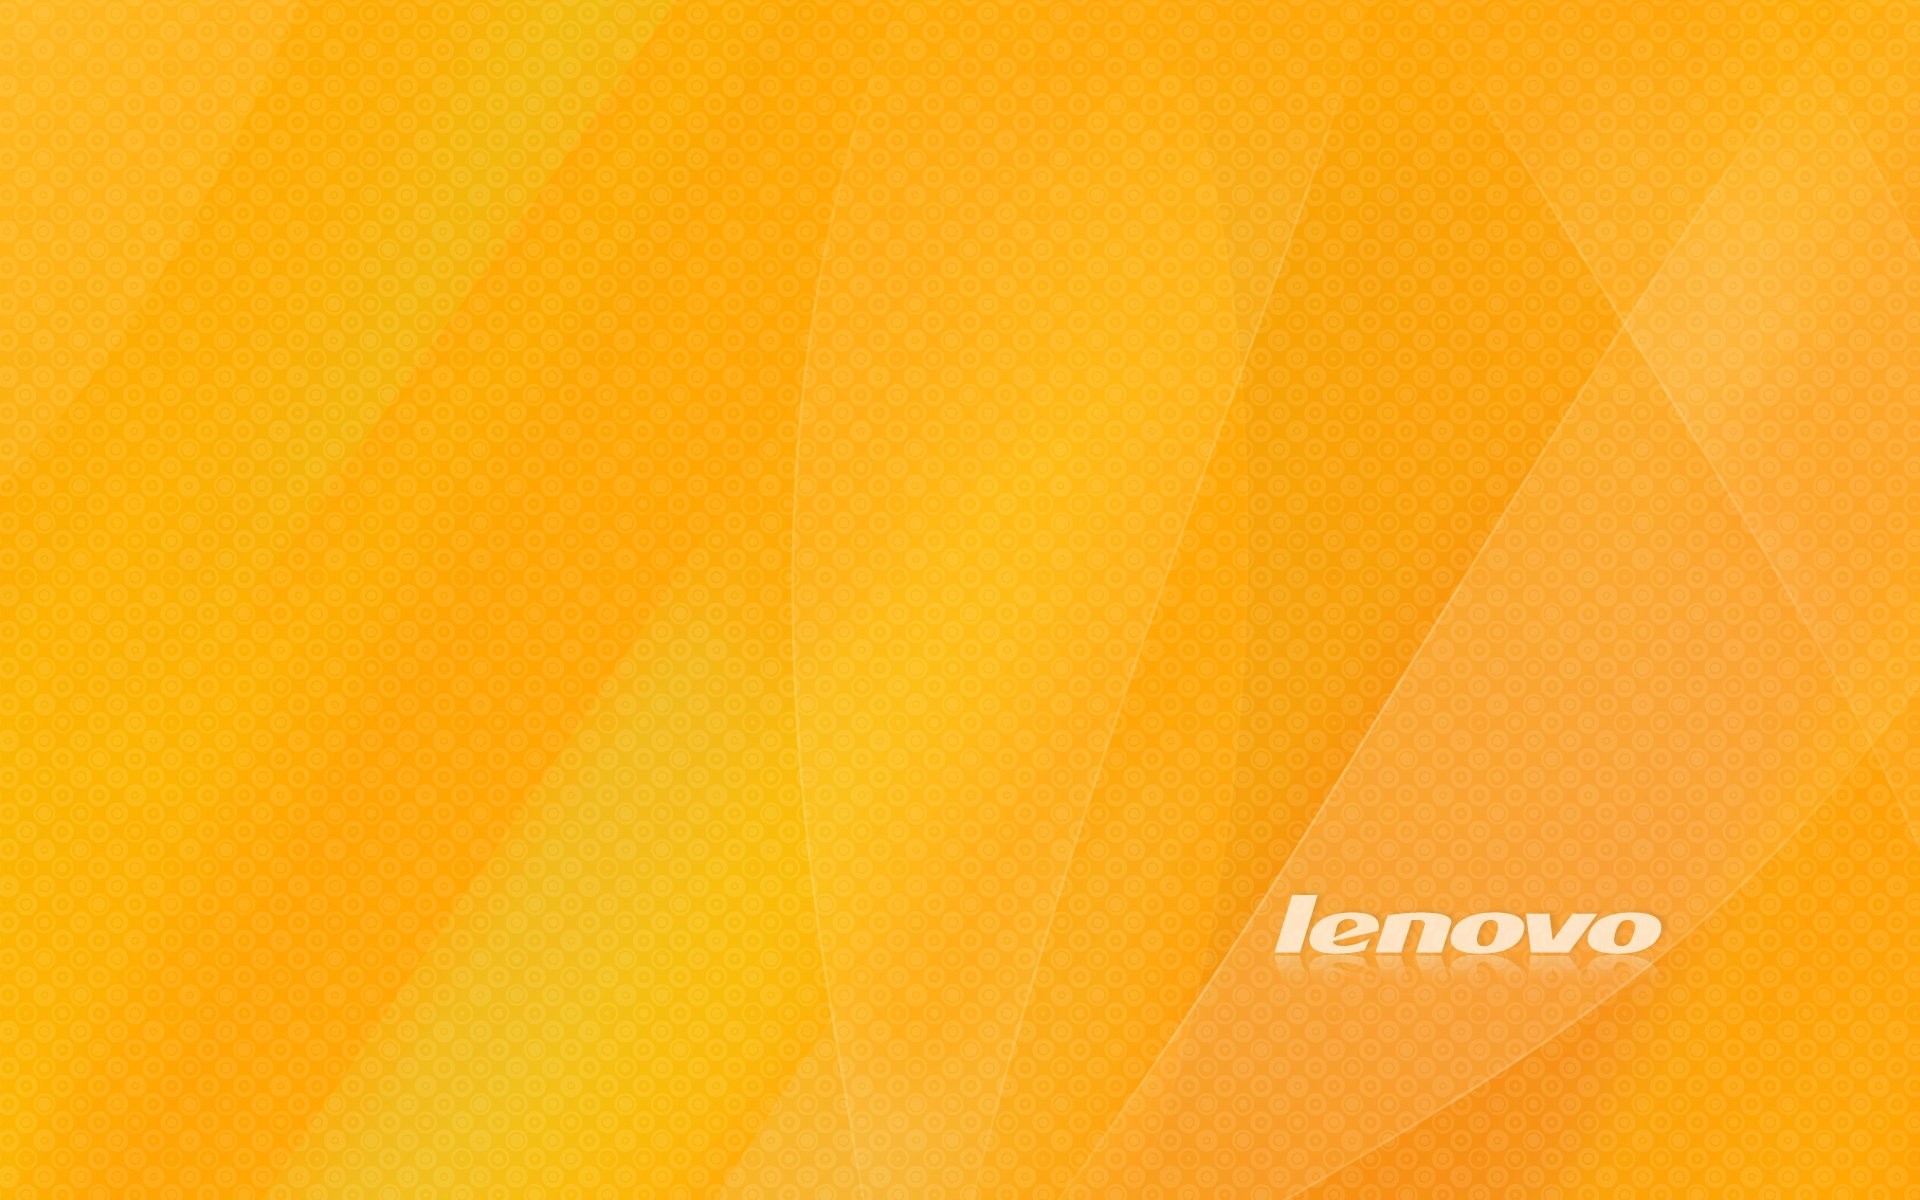 lenovo wallpaper,orange,yellow,amber,font,peach